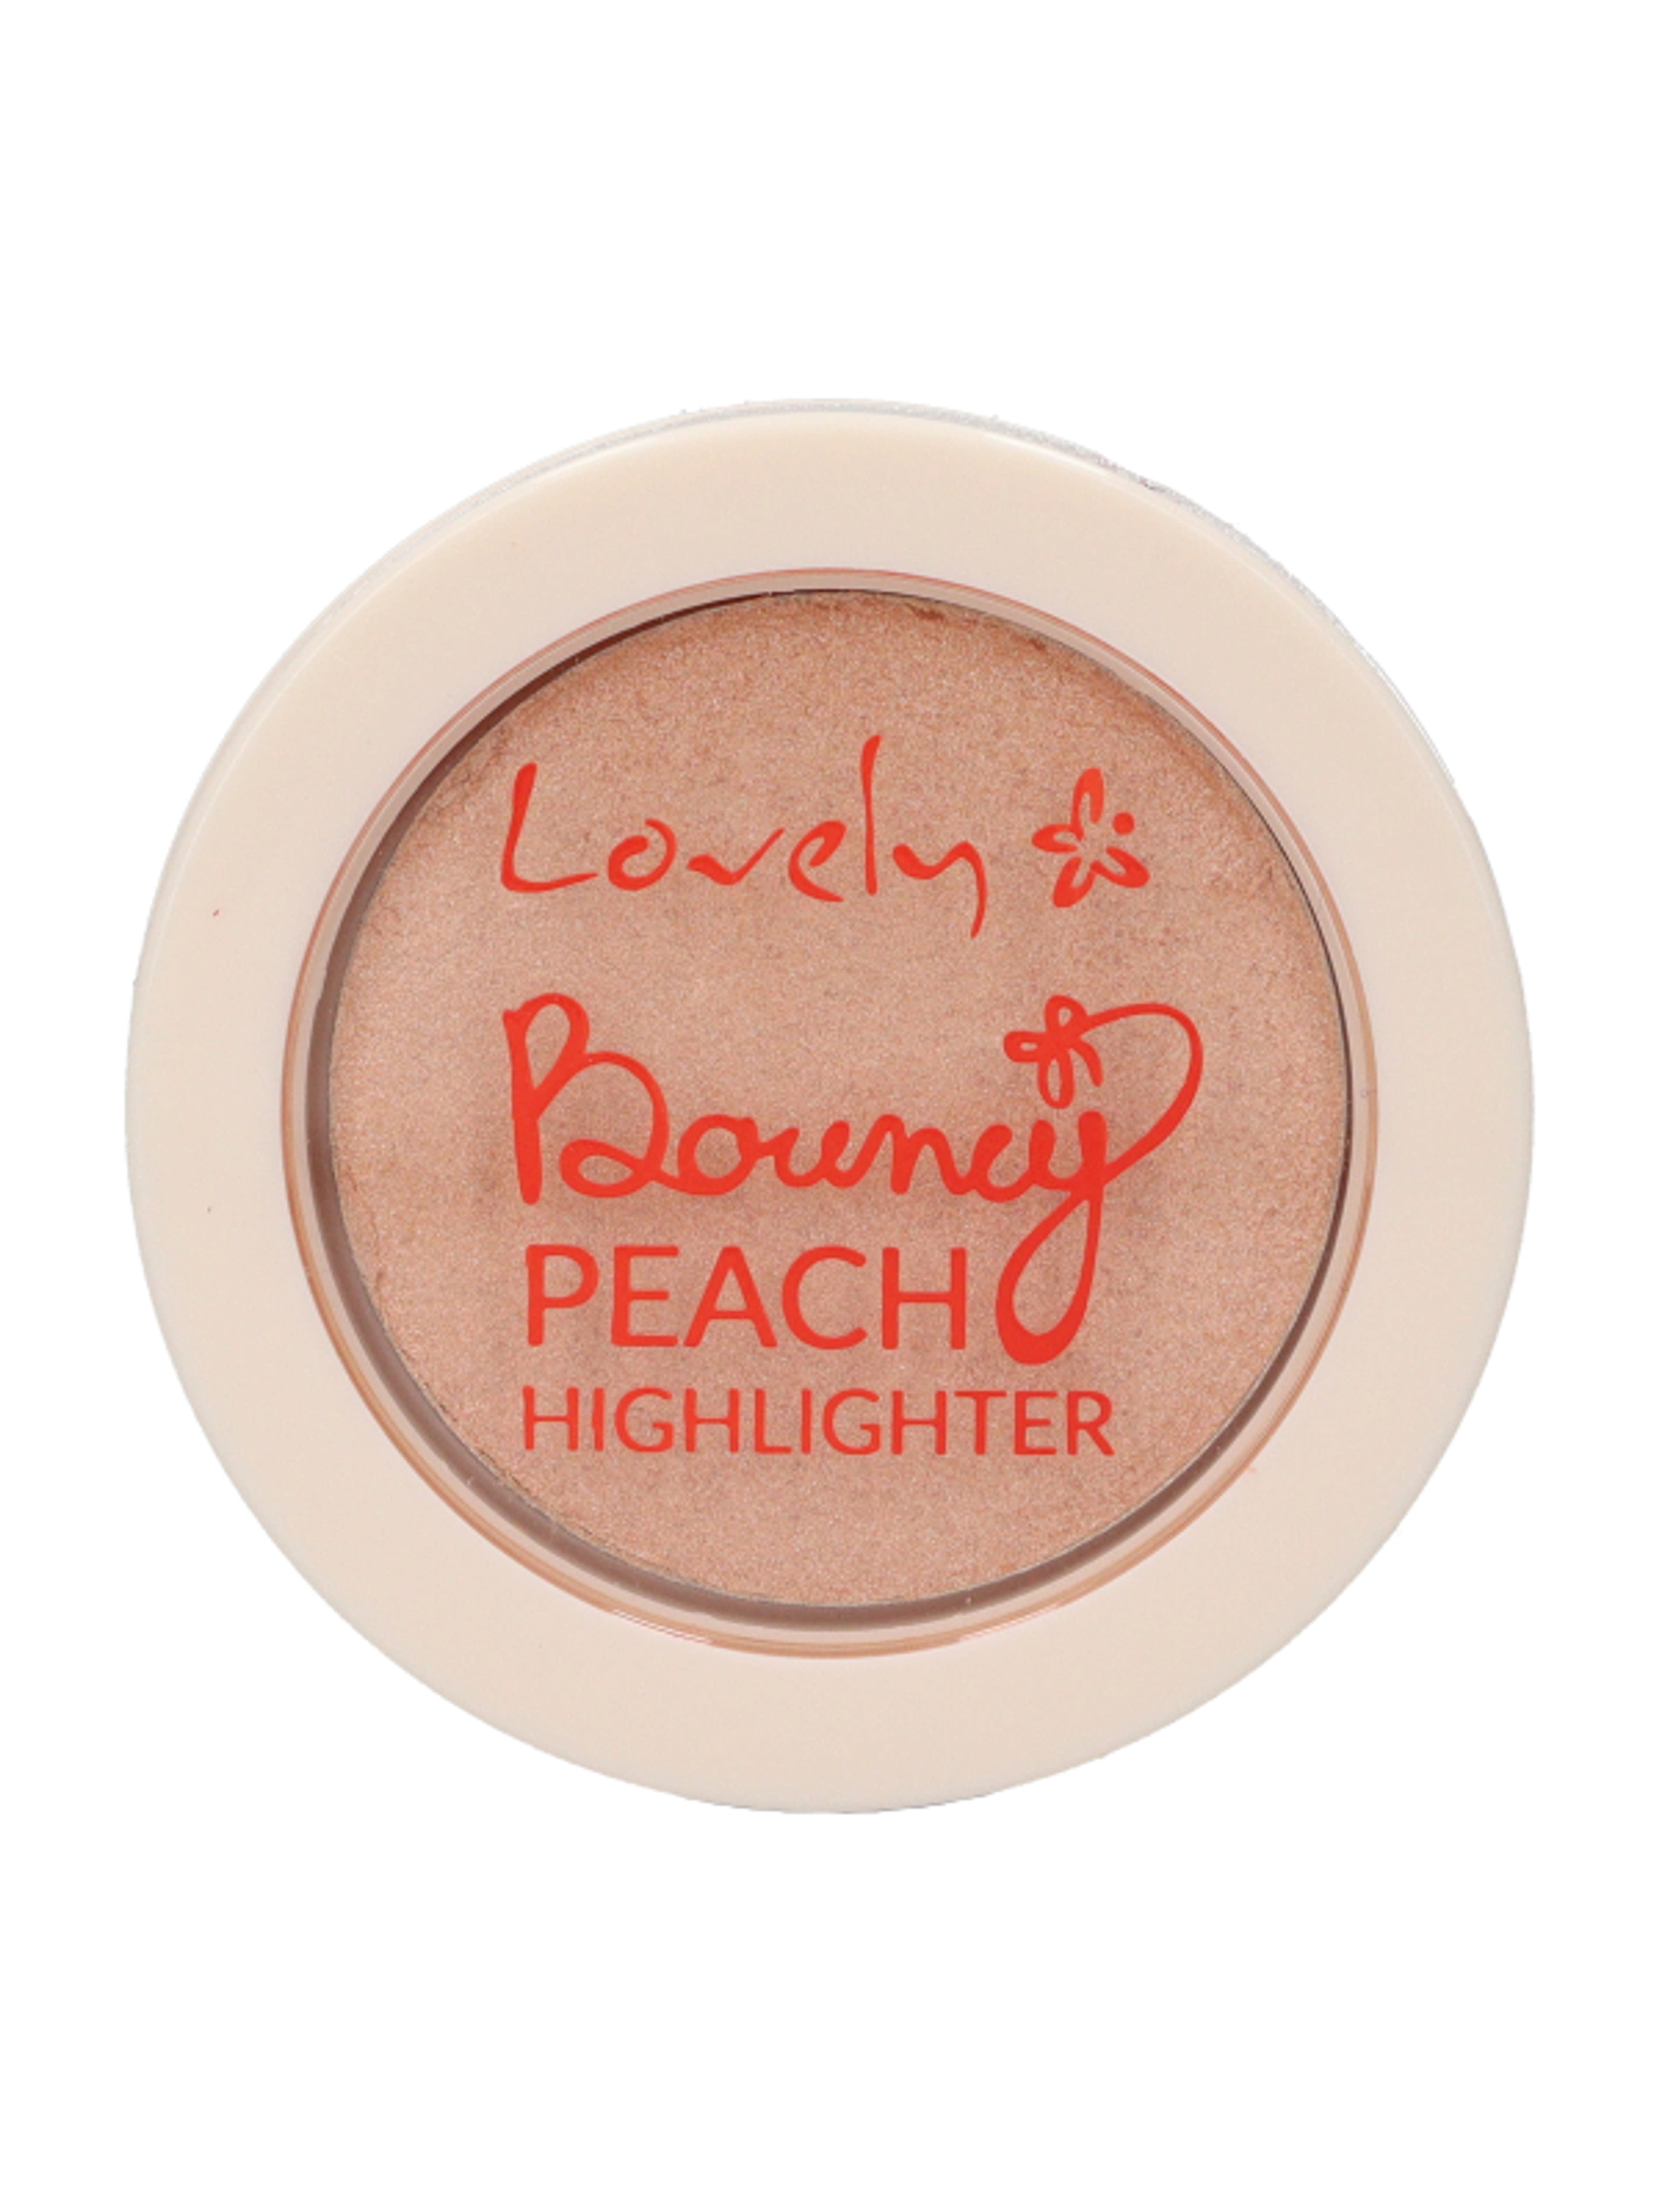 Lovely Bouncy Peach highlighter - 1 db